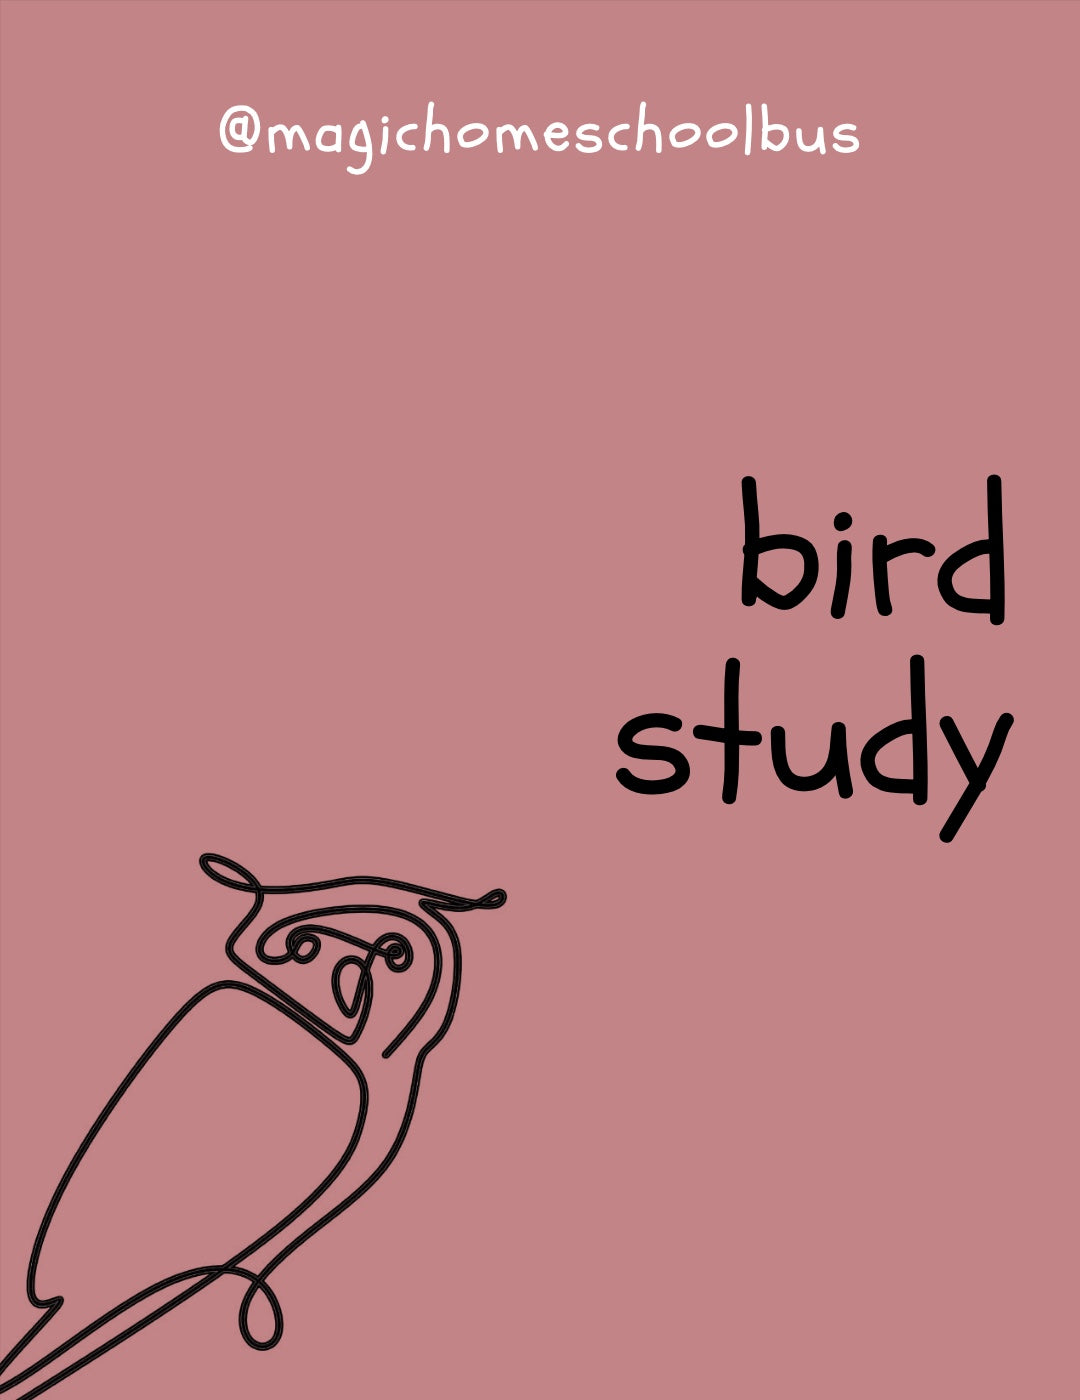 Magic Homeschool Bus - Birds Study